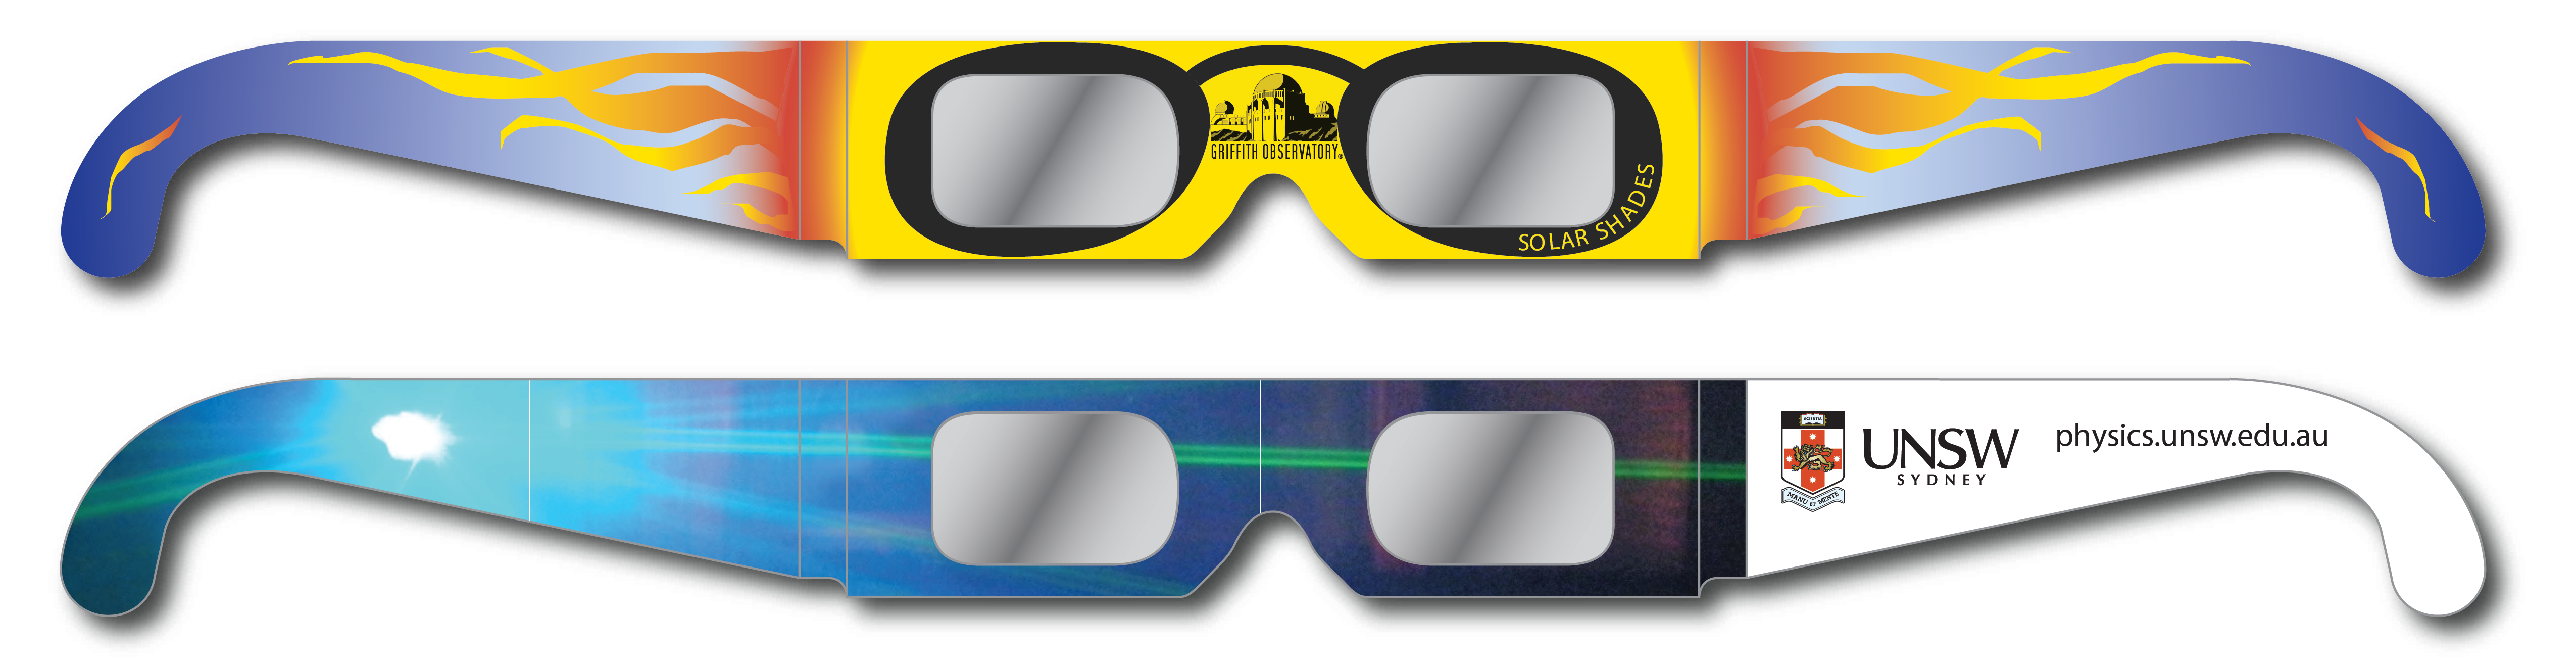 Customize Eclipse Glasses